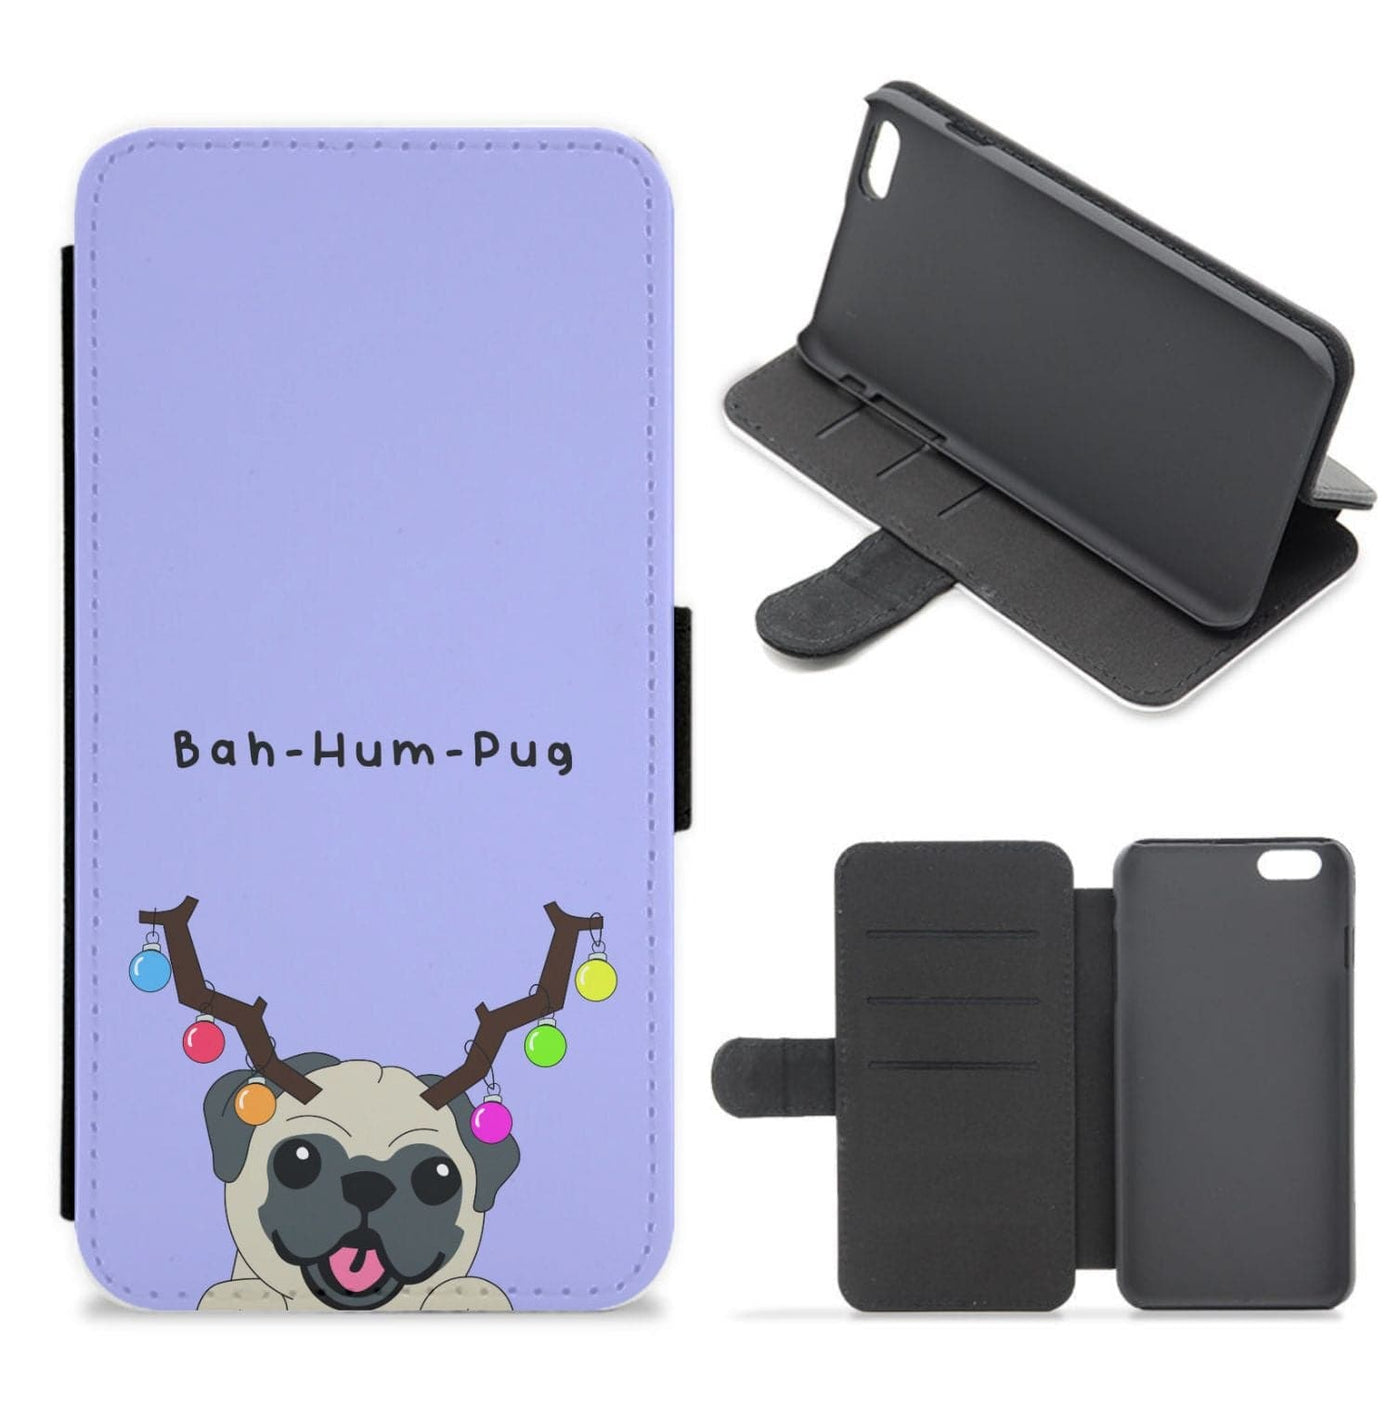 Buh-hum-pug - Christmas Flip / Wallet Phone Case